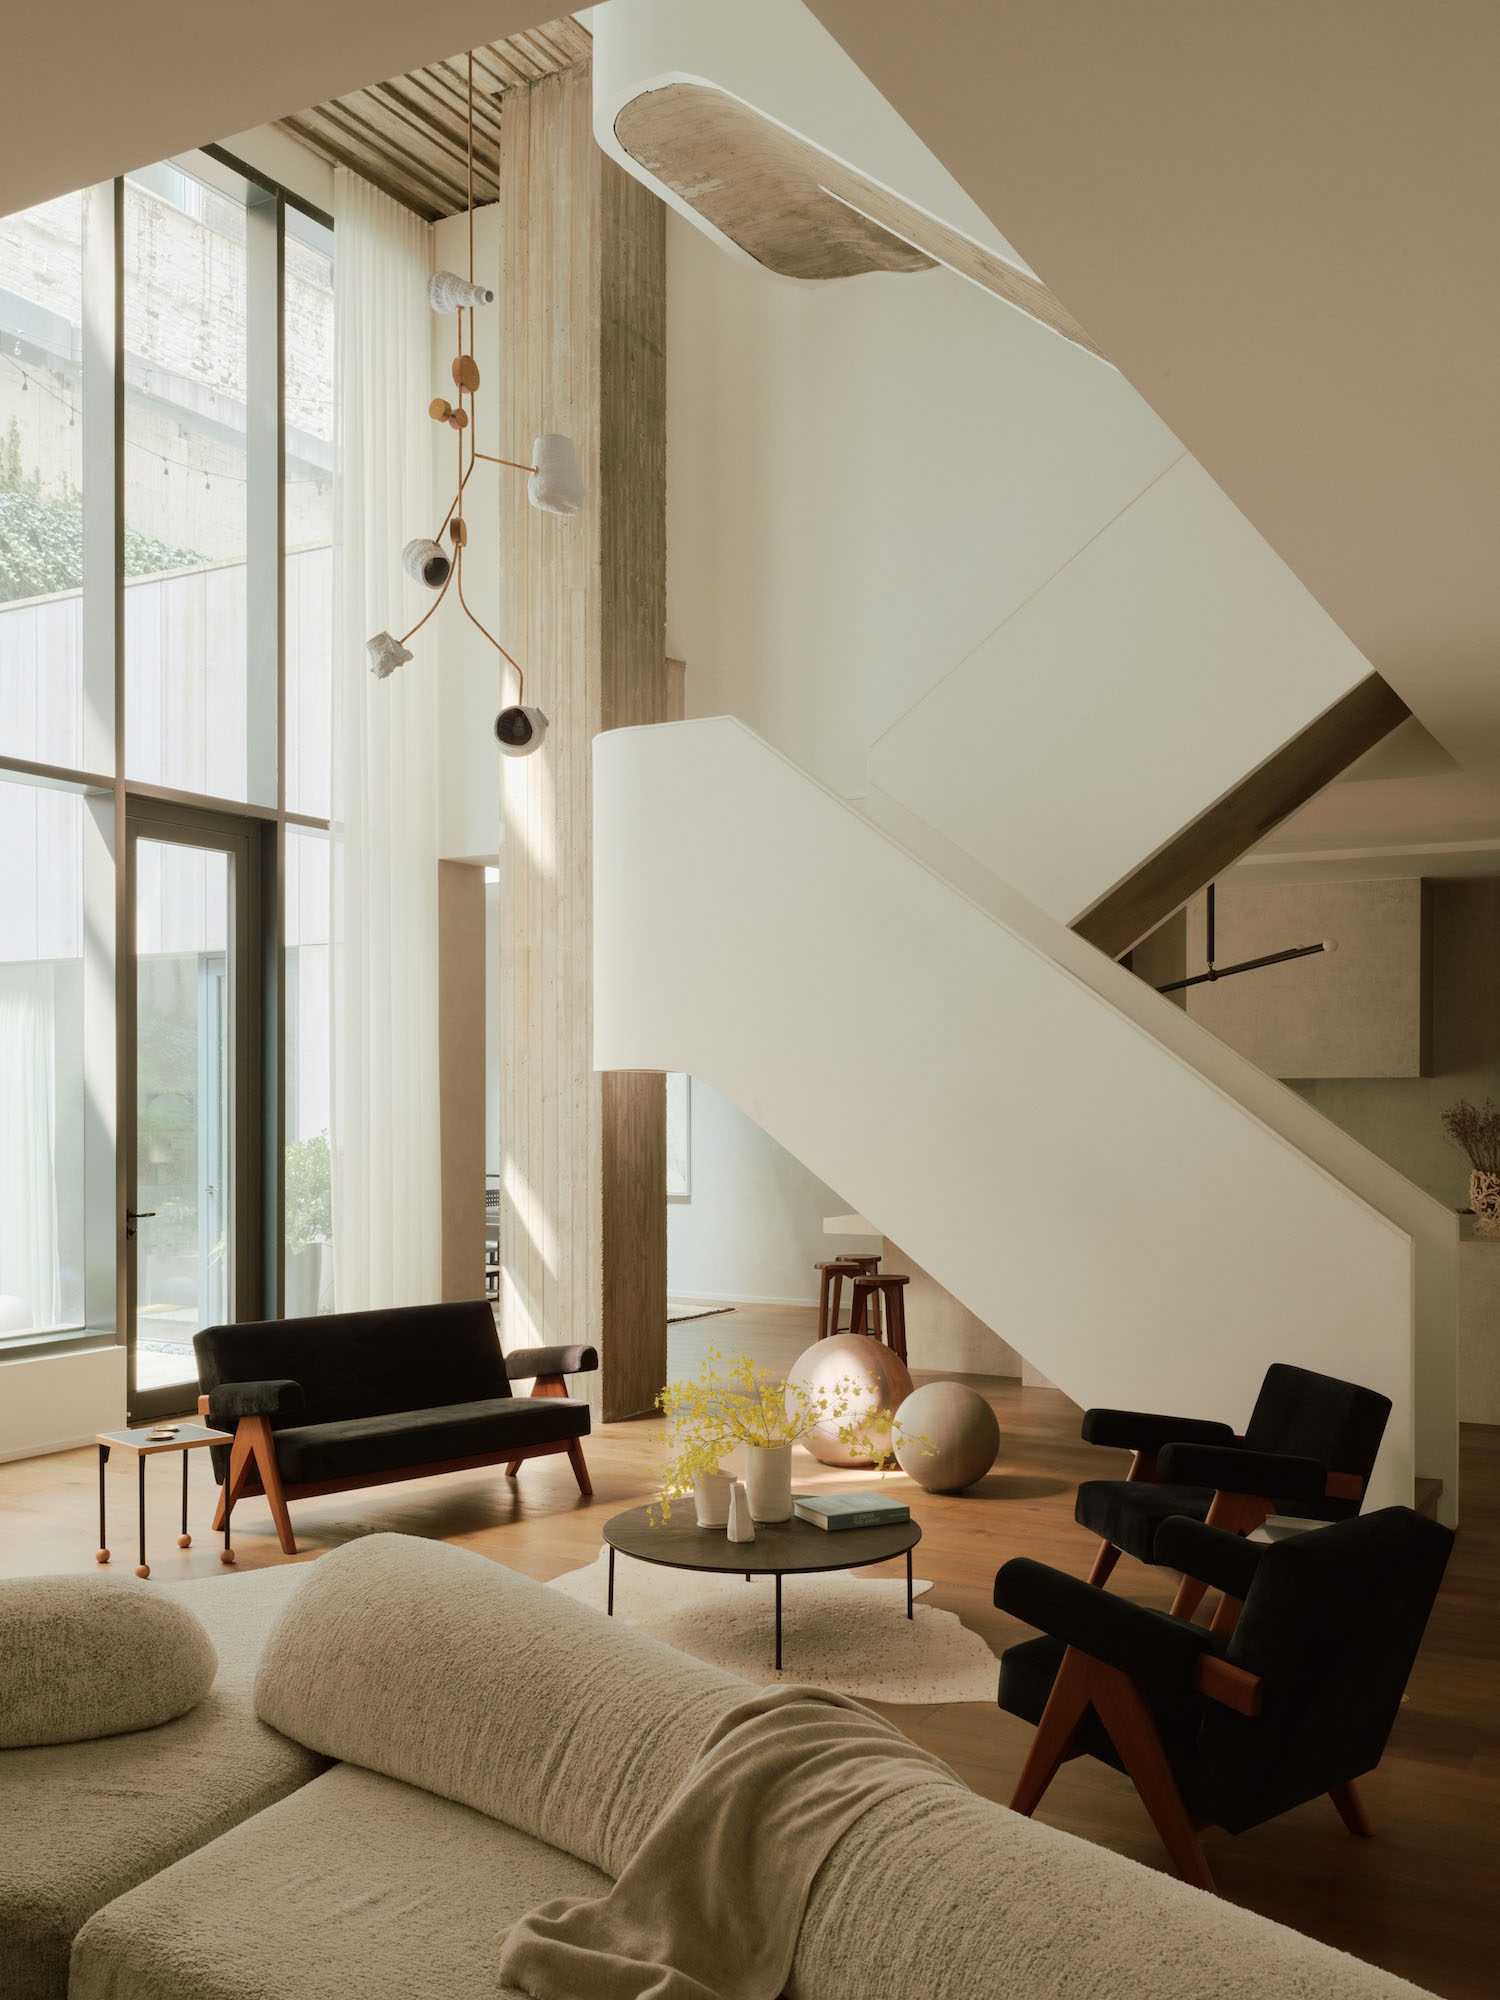 Jae Joo,阁楼设计,住宅设计,现代风格设计,纽约,复式公寓设计案例,极简主义,极简风格